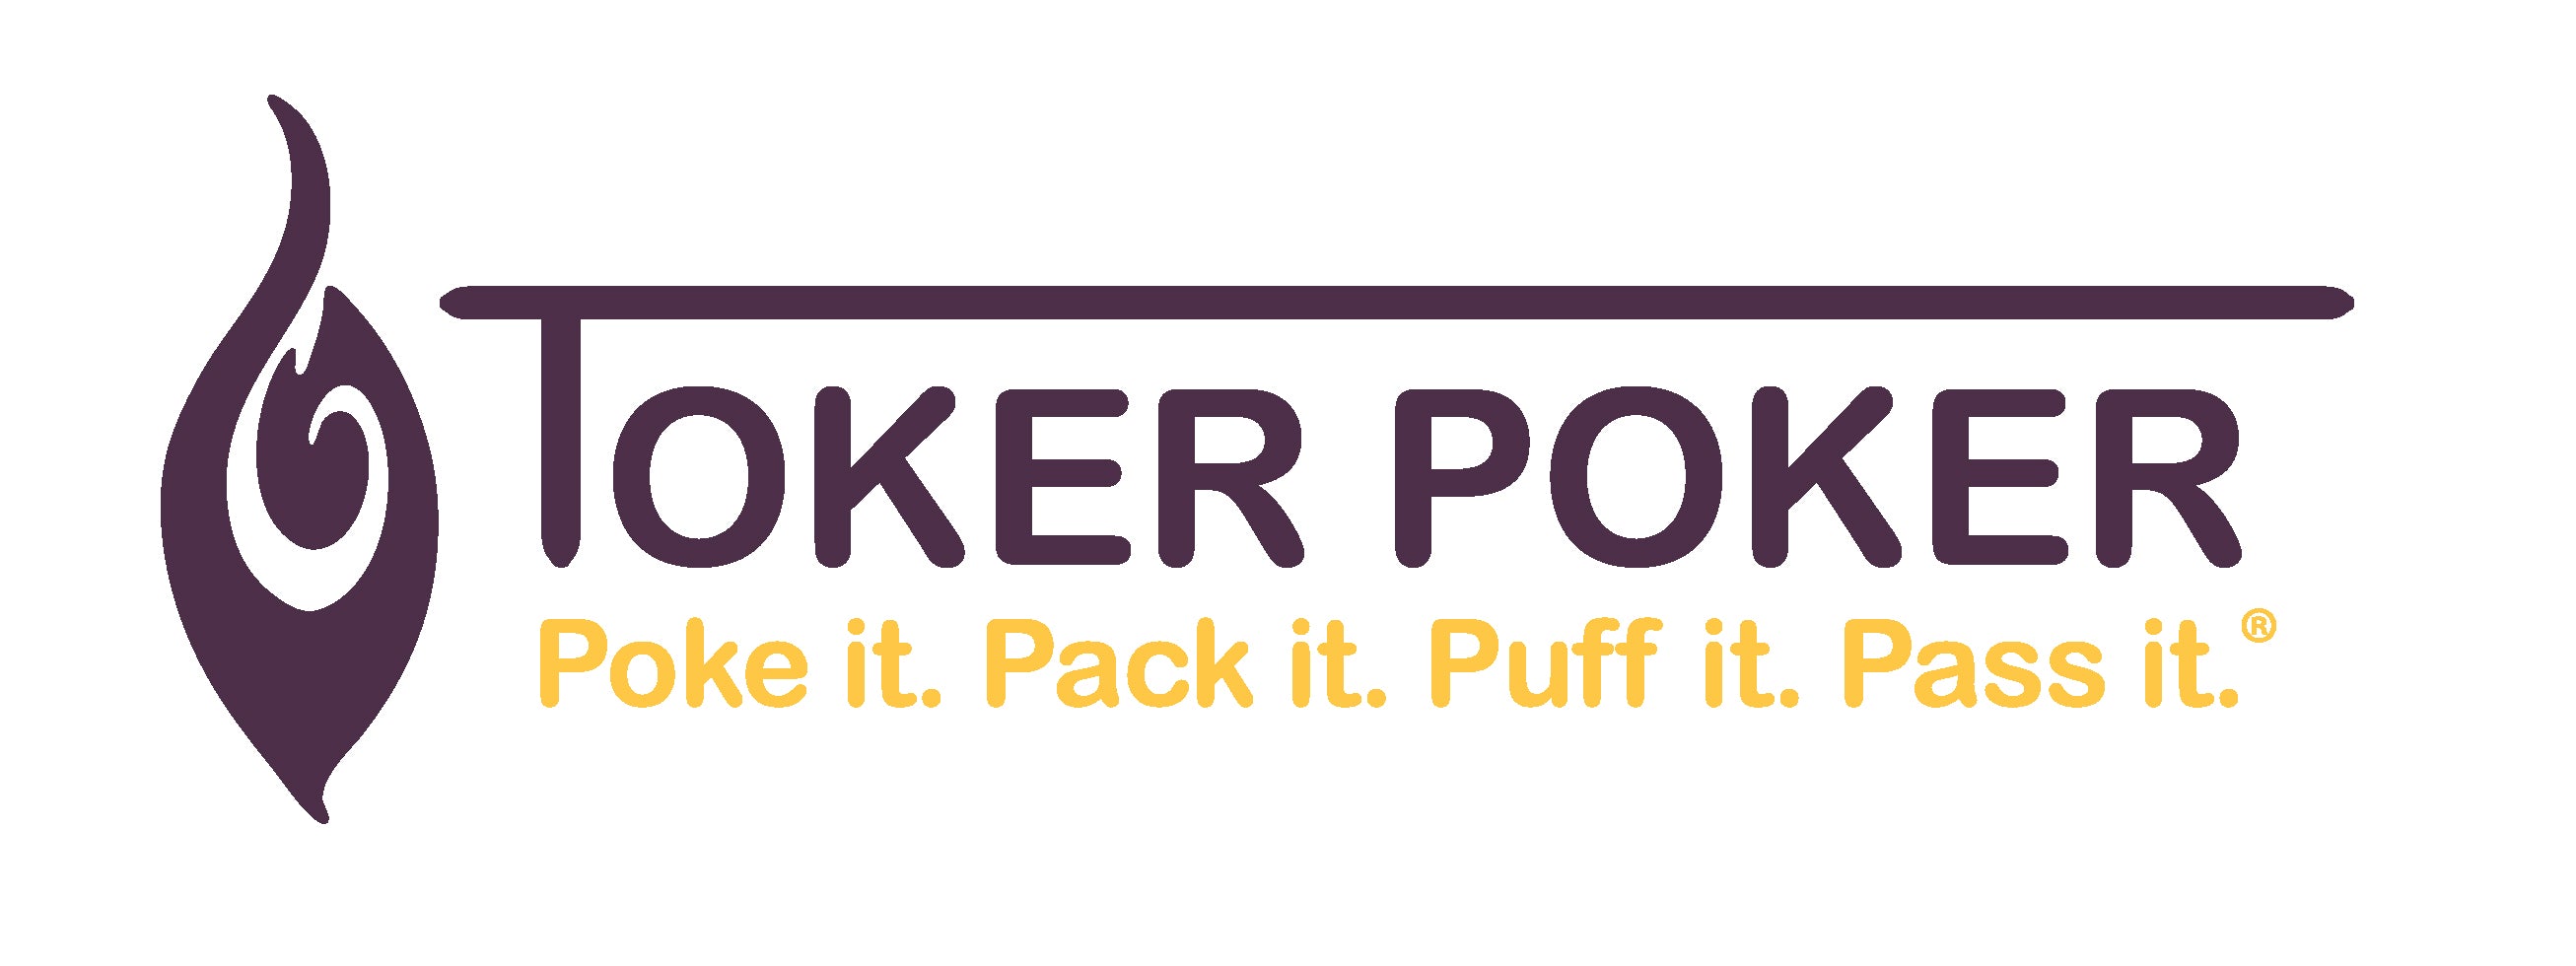 Toker Poker Metallic Gold Lighter Case Hemp Wick Holder Fits Large BIC -  Classic Achievements, Inc